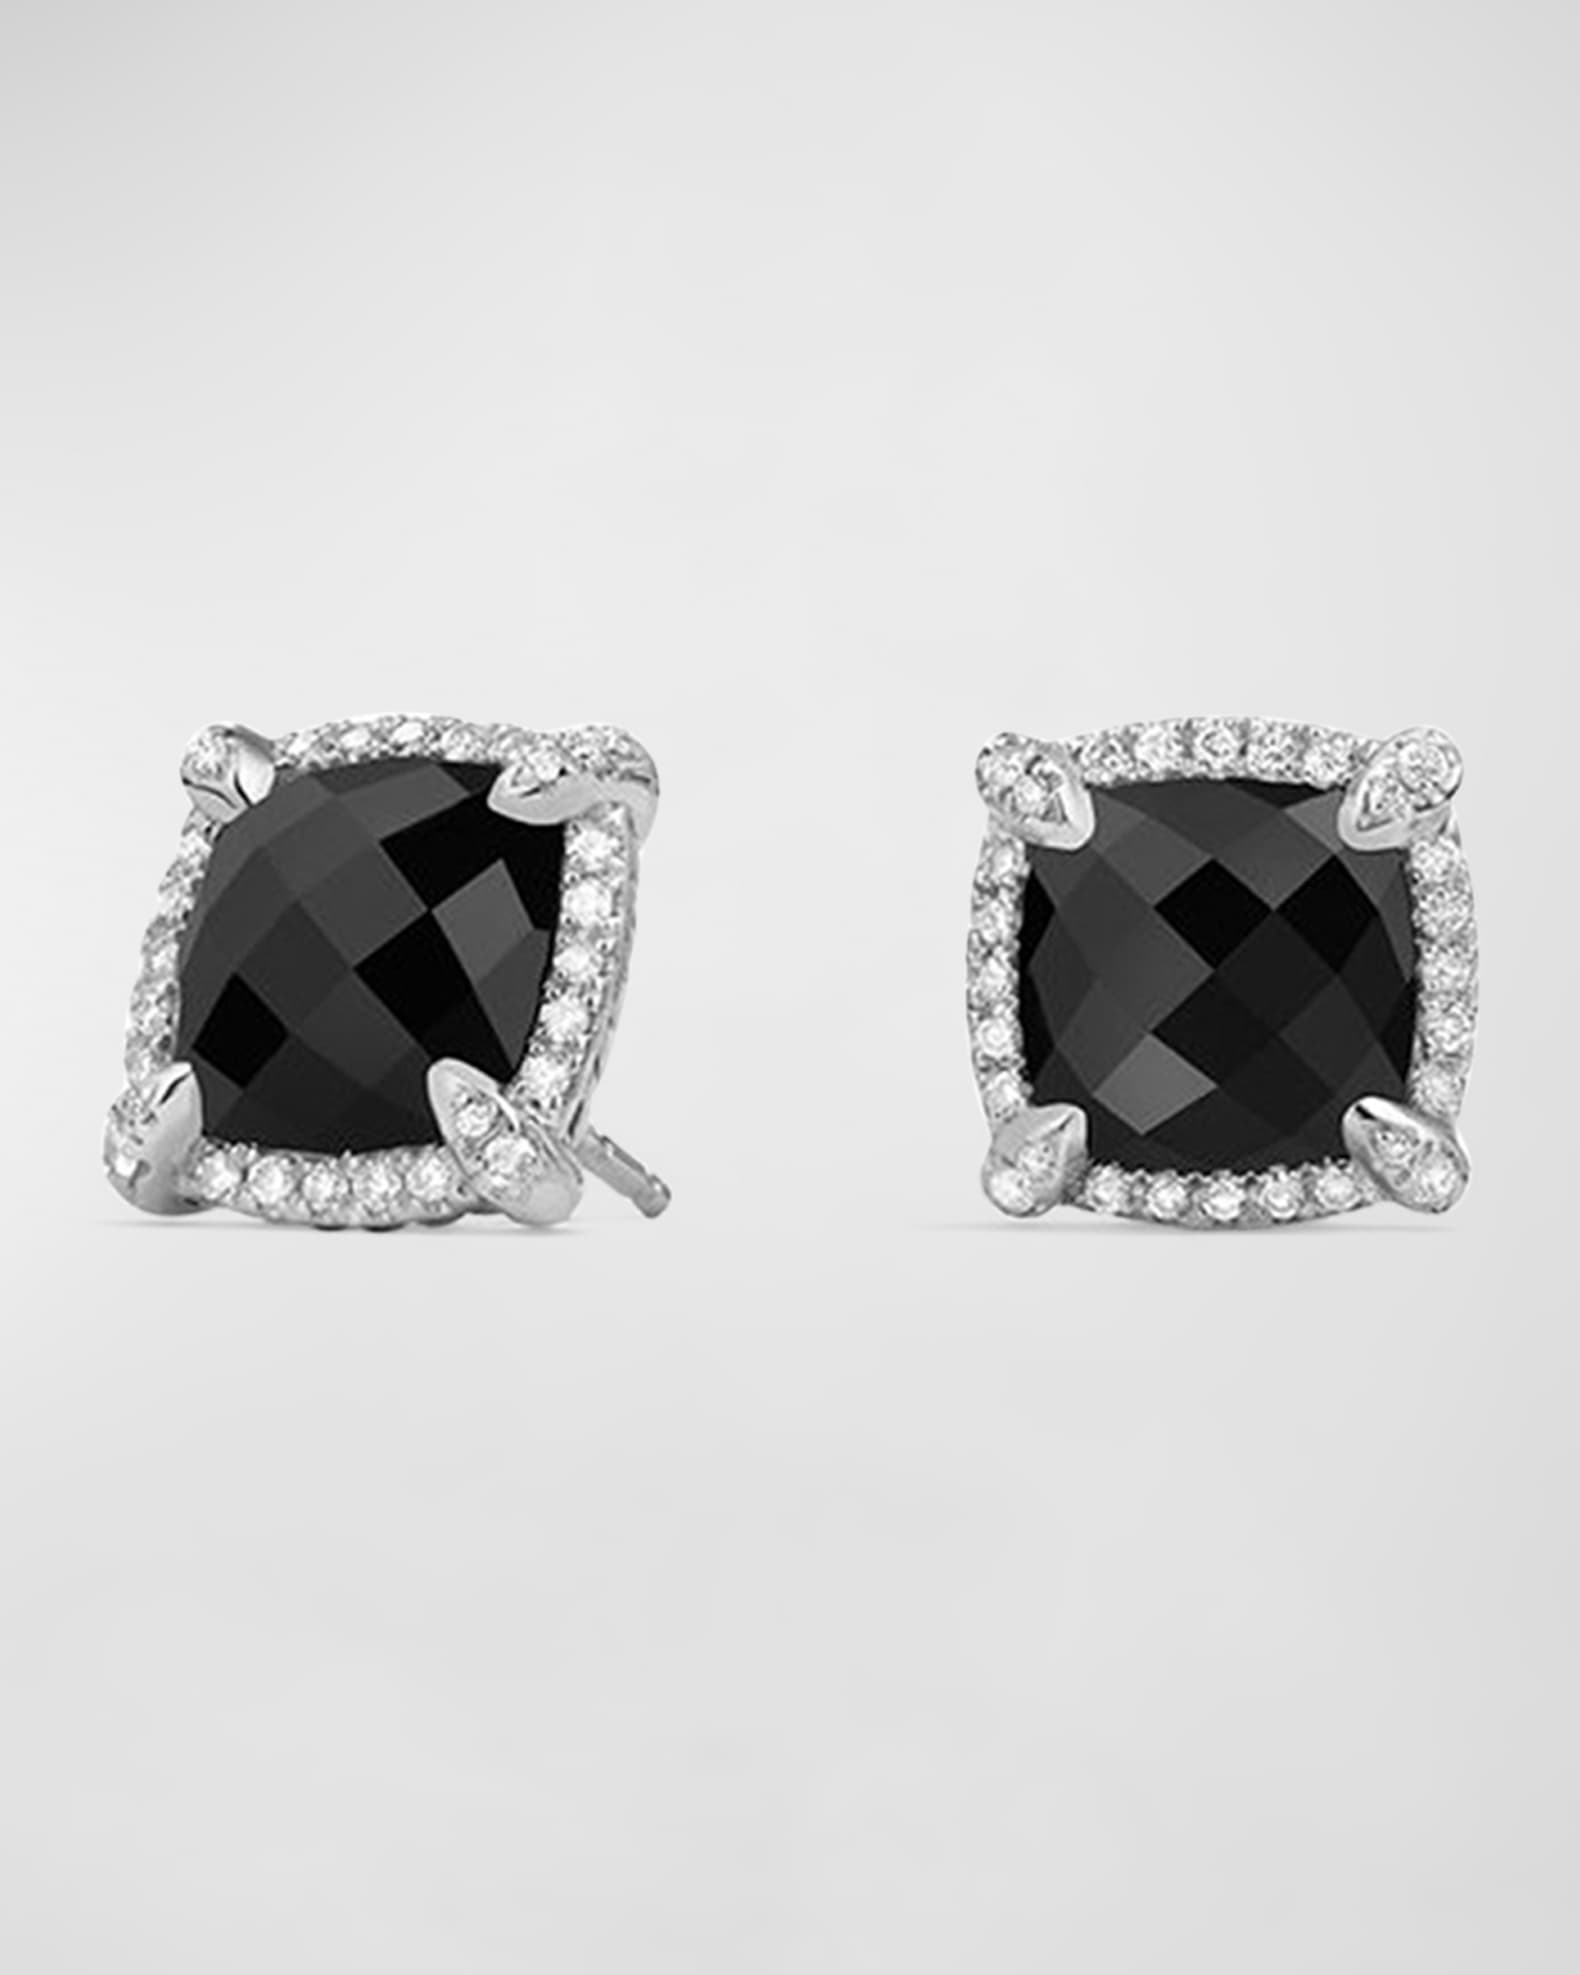 David Yurman 9mm Chatelaine Stud Earrings with Diamonds | Neiman Marcus